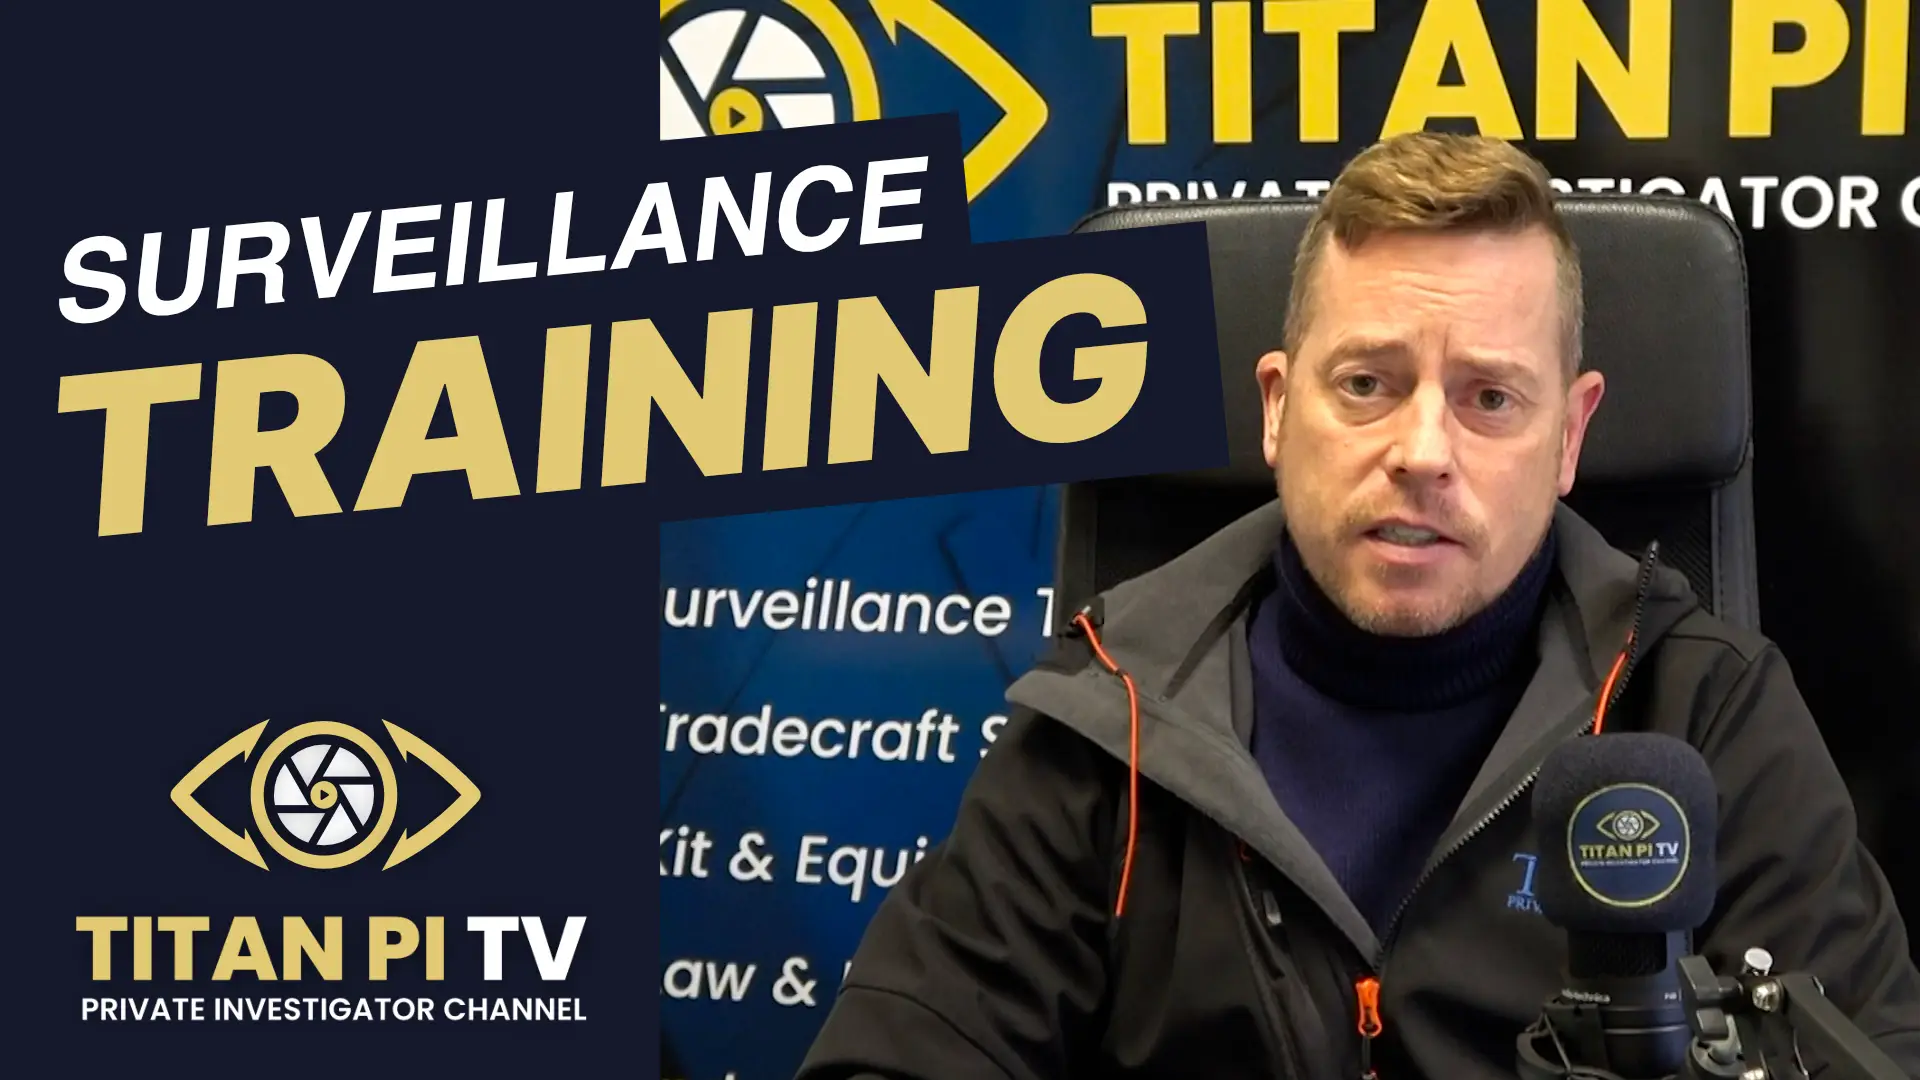 Surveillacne Training Episode 4 - Titan PI TV